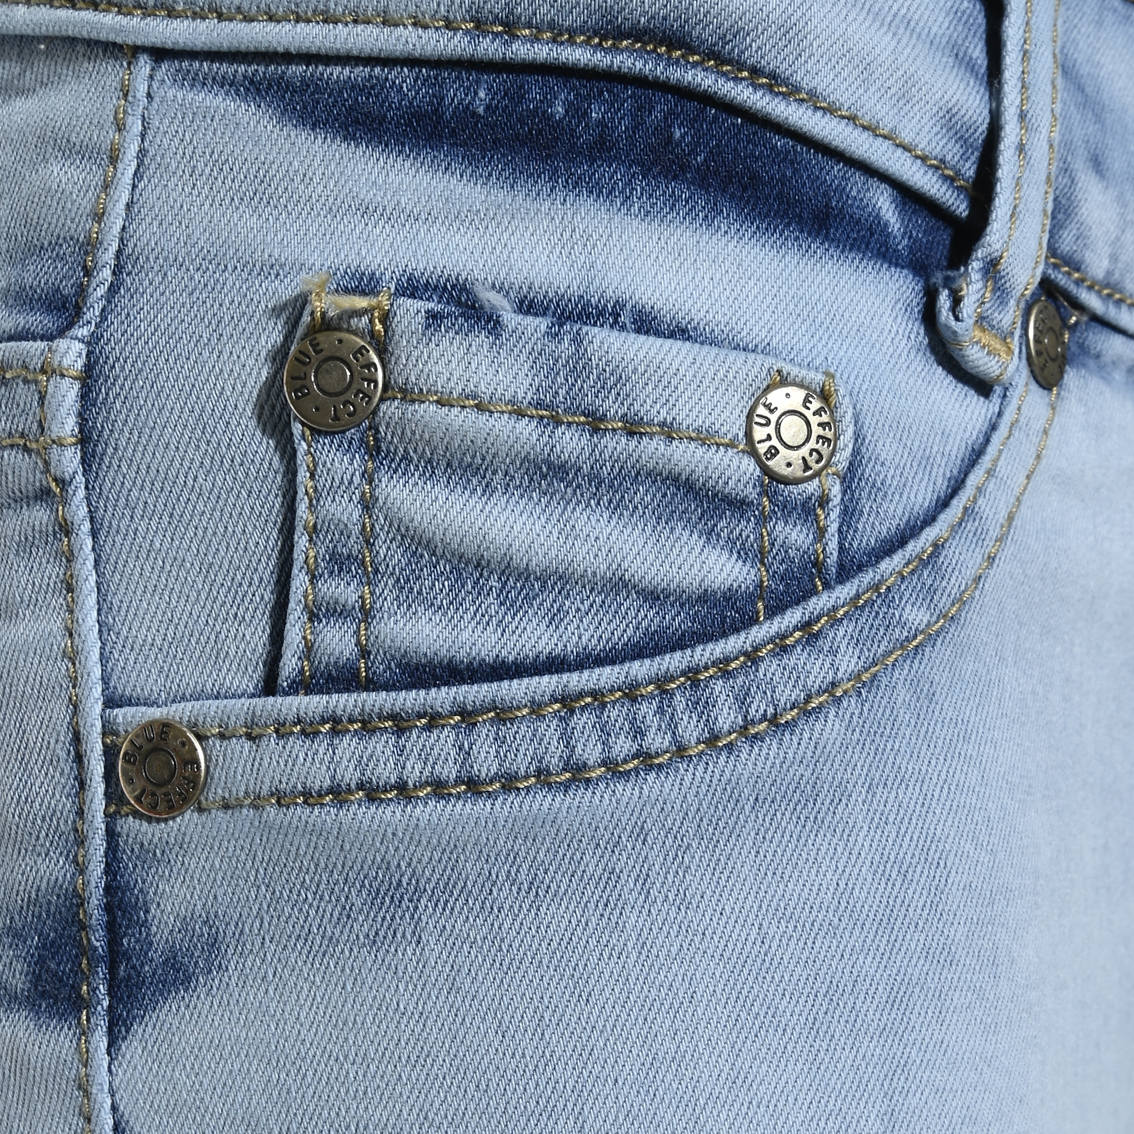 1302-Girls High-Waist Jeans Cropped, Knee Cut, Ultrastretch, verfügbar in Slim,Normal